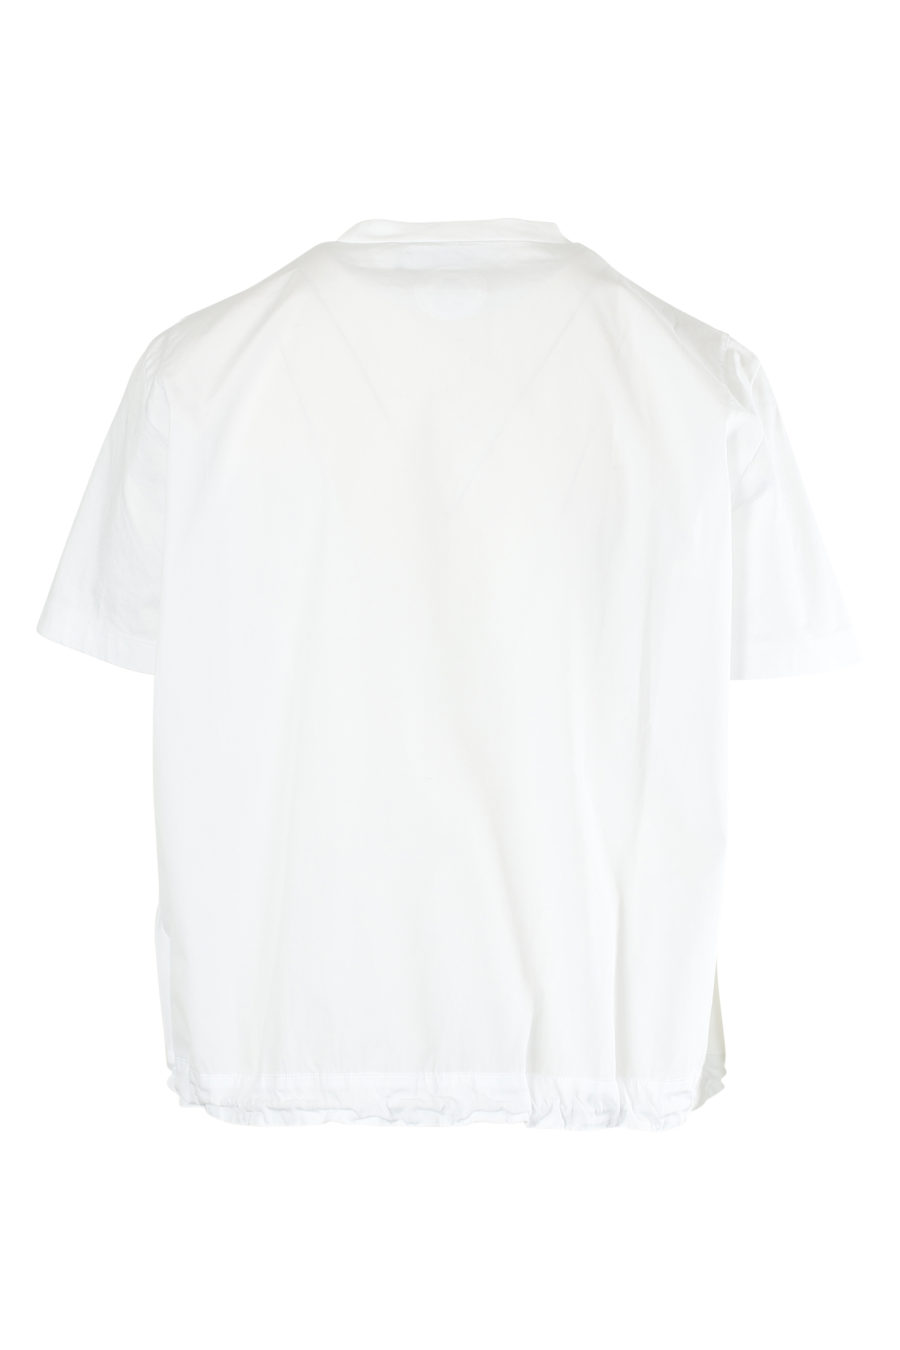 T-shirt blanc ajustable "Icon" graffiti - IMG 5464